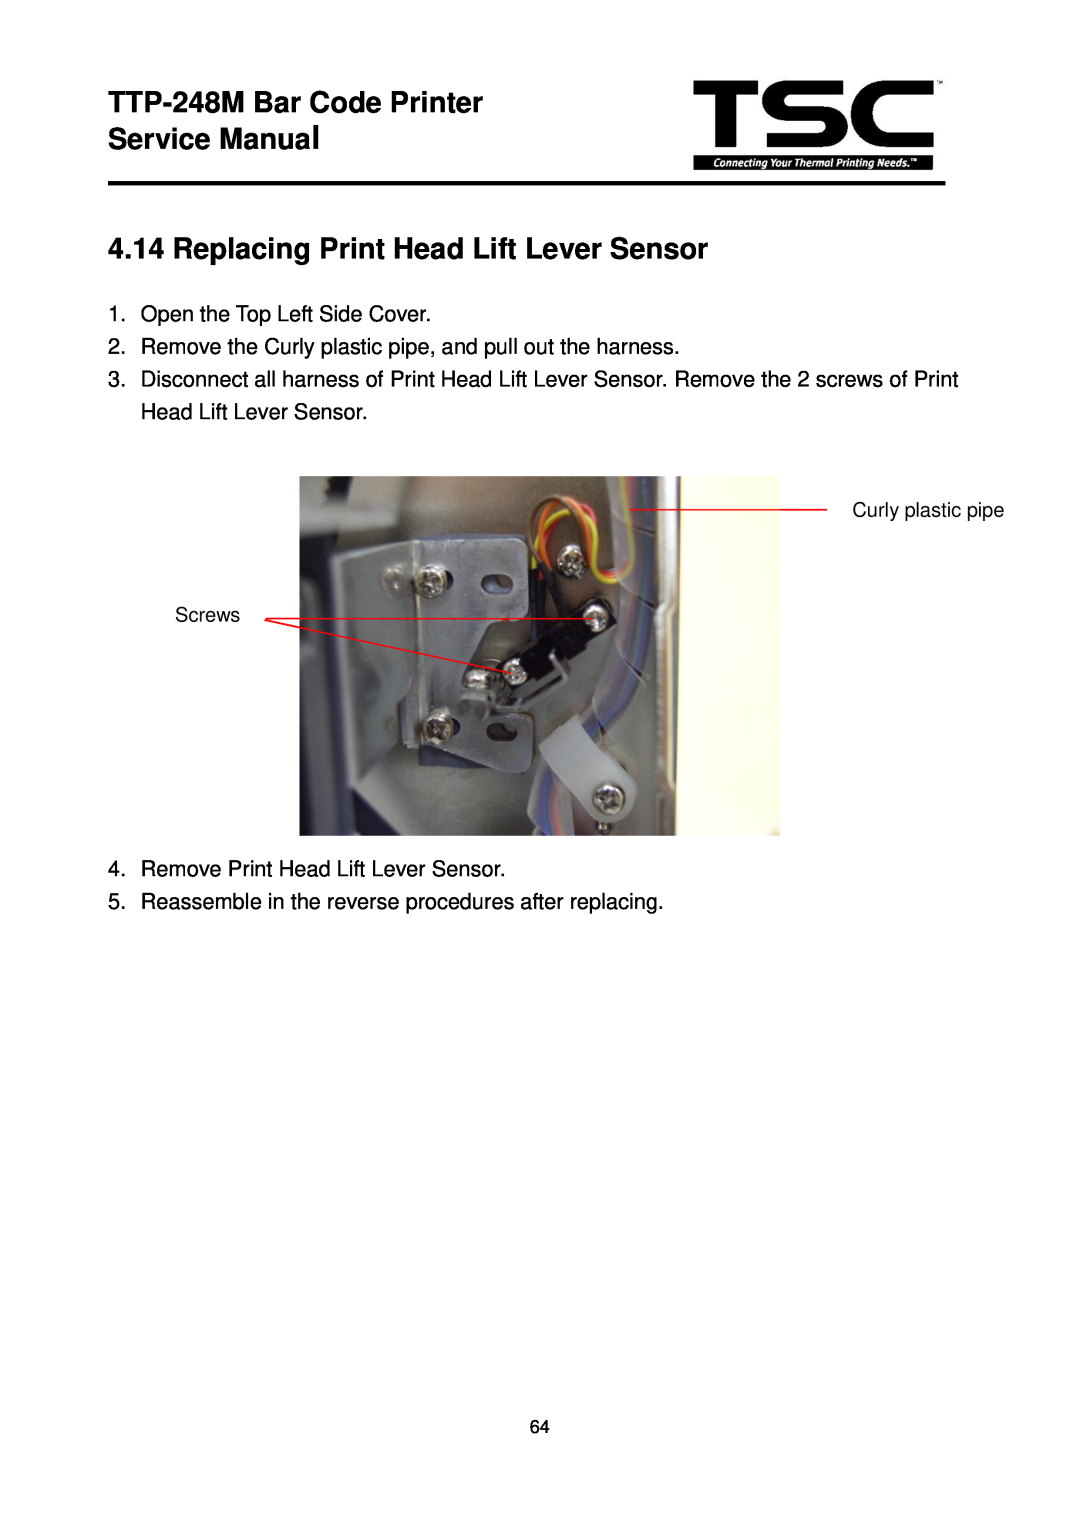 The Speaker Company TTP 248M Replacing Print Head Lift Lever Sensor, TTP-248M Bar Code Printer Service Manual 